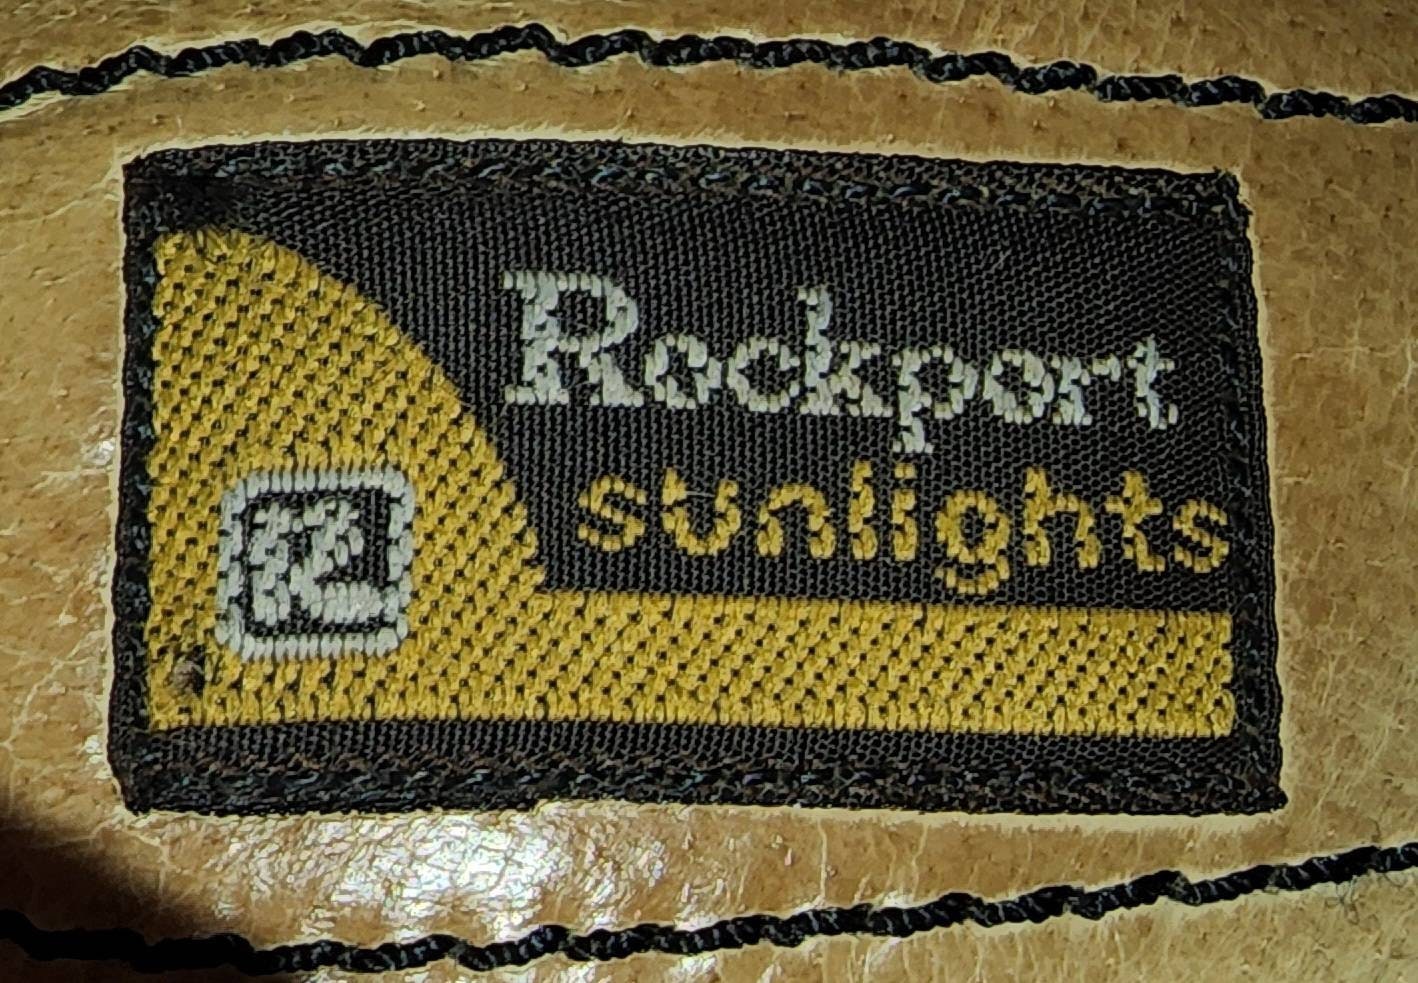 Vintage Rockport Sandals 1970s 80s Tan Leather Wedge Heel Open Toe Sandals Contrasting Trim Sunlights Boho 7 1/2 B